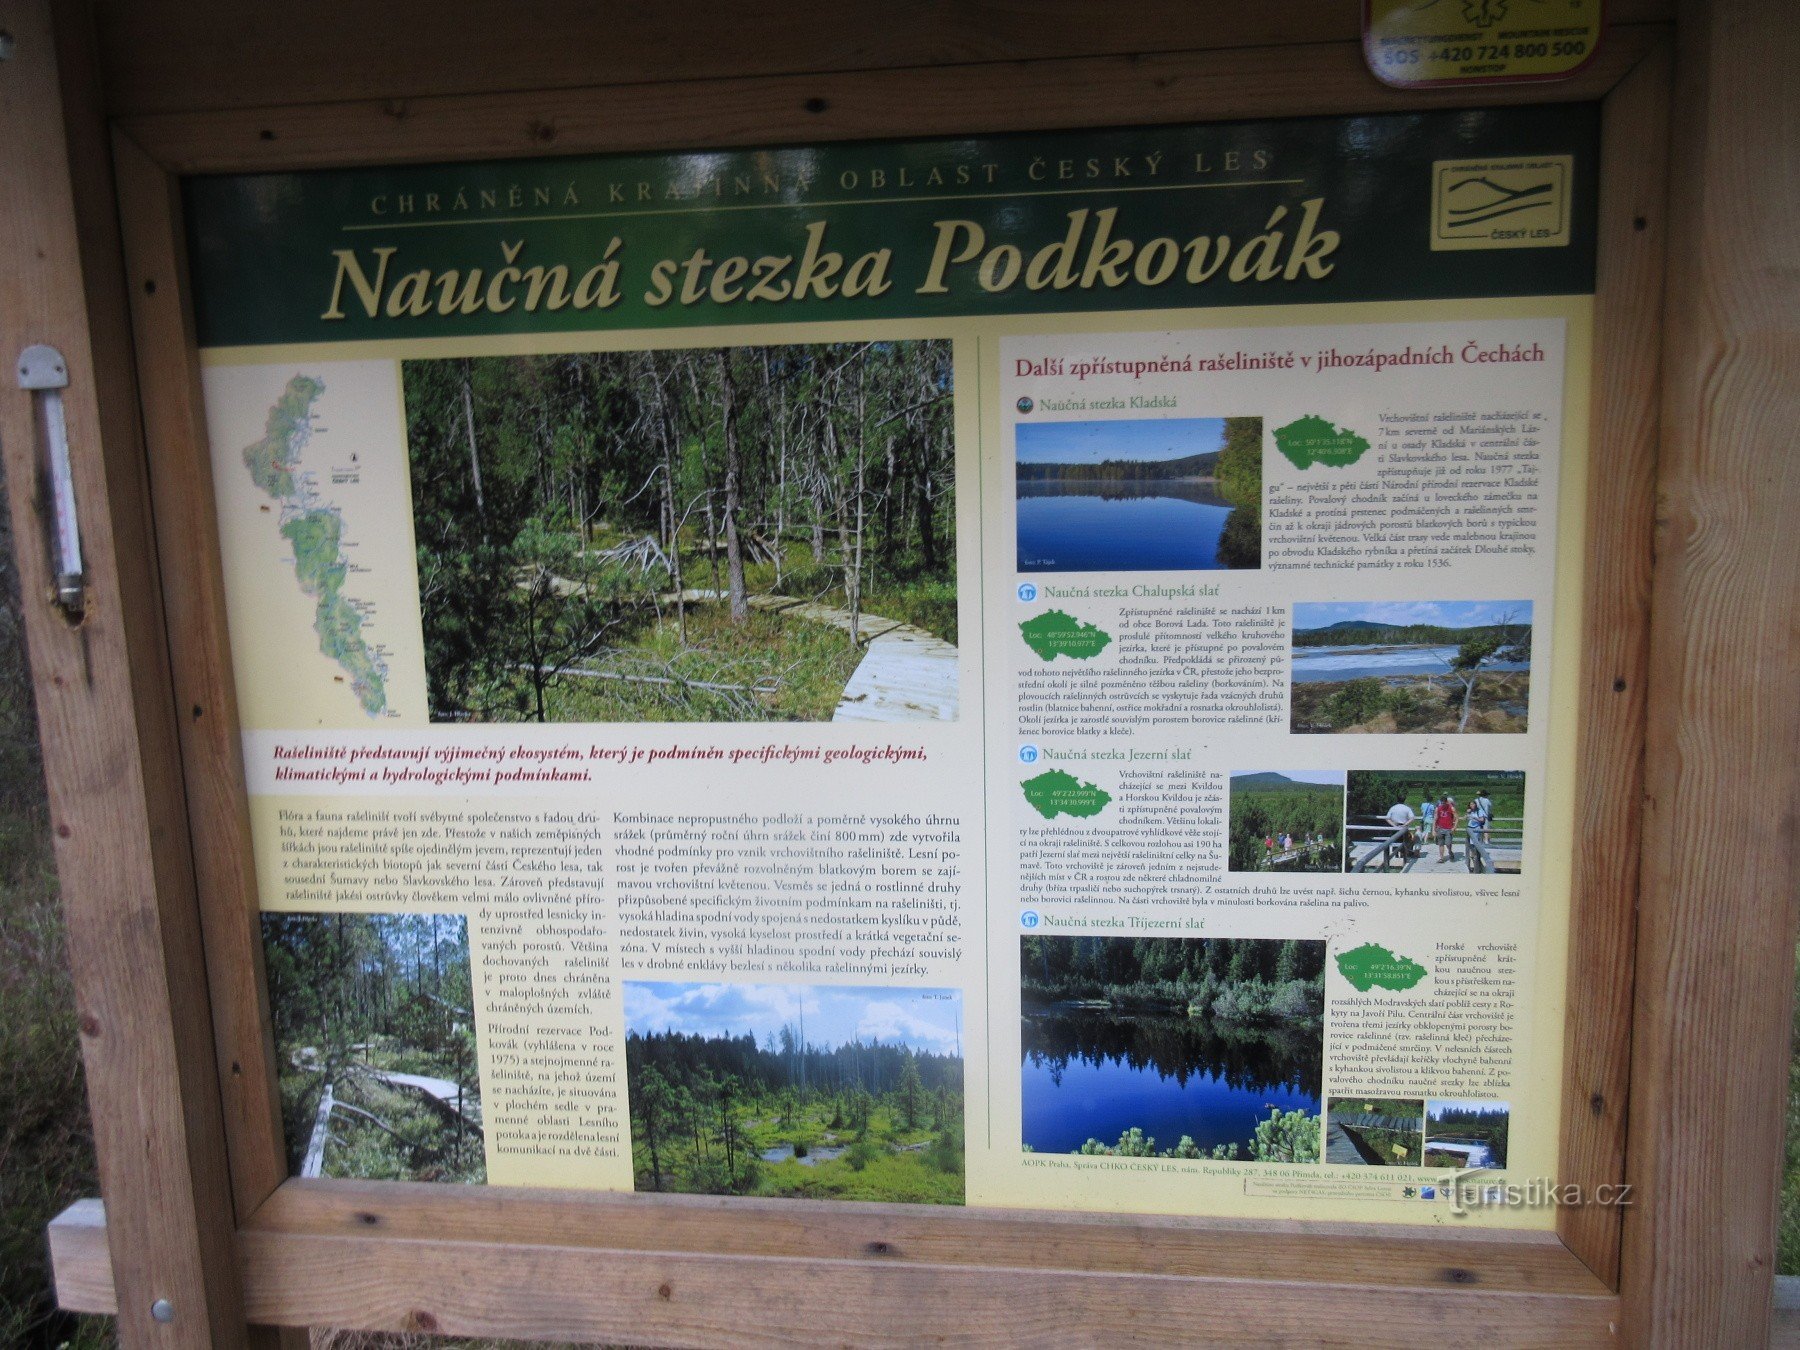 Bohemian Forest - Podkovákin koulutuspolku